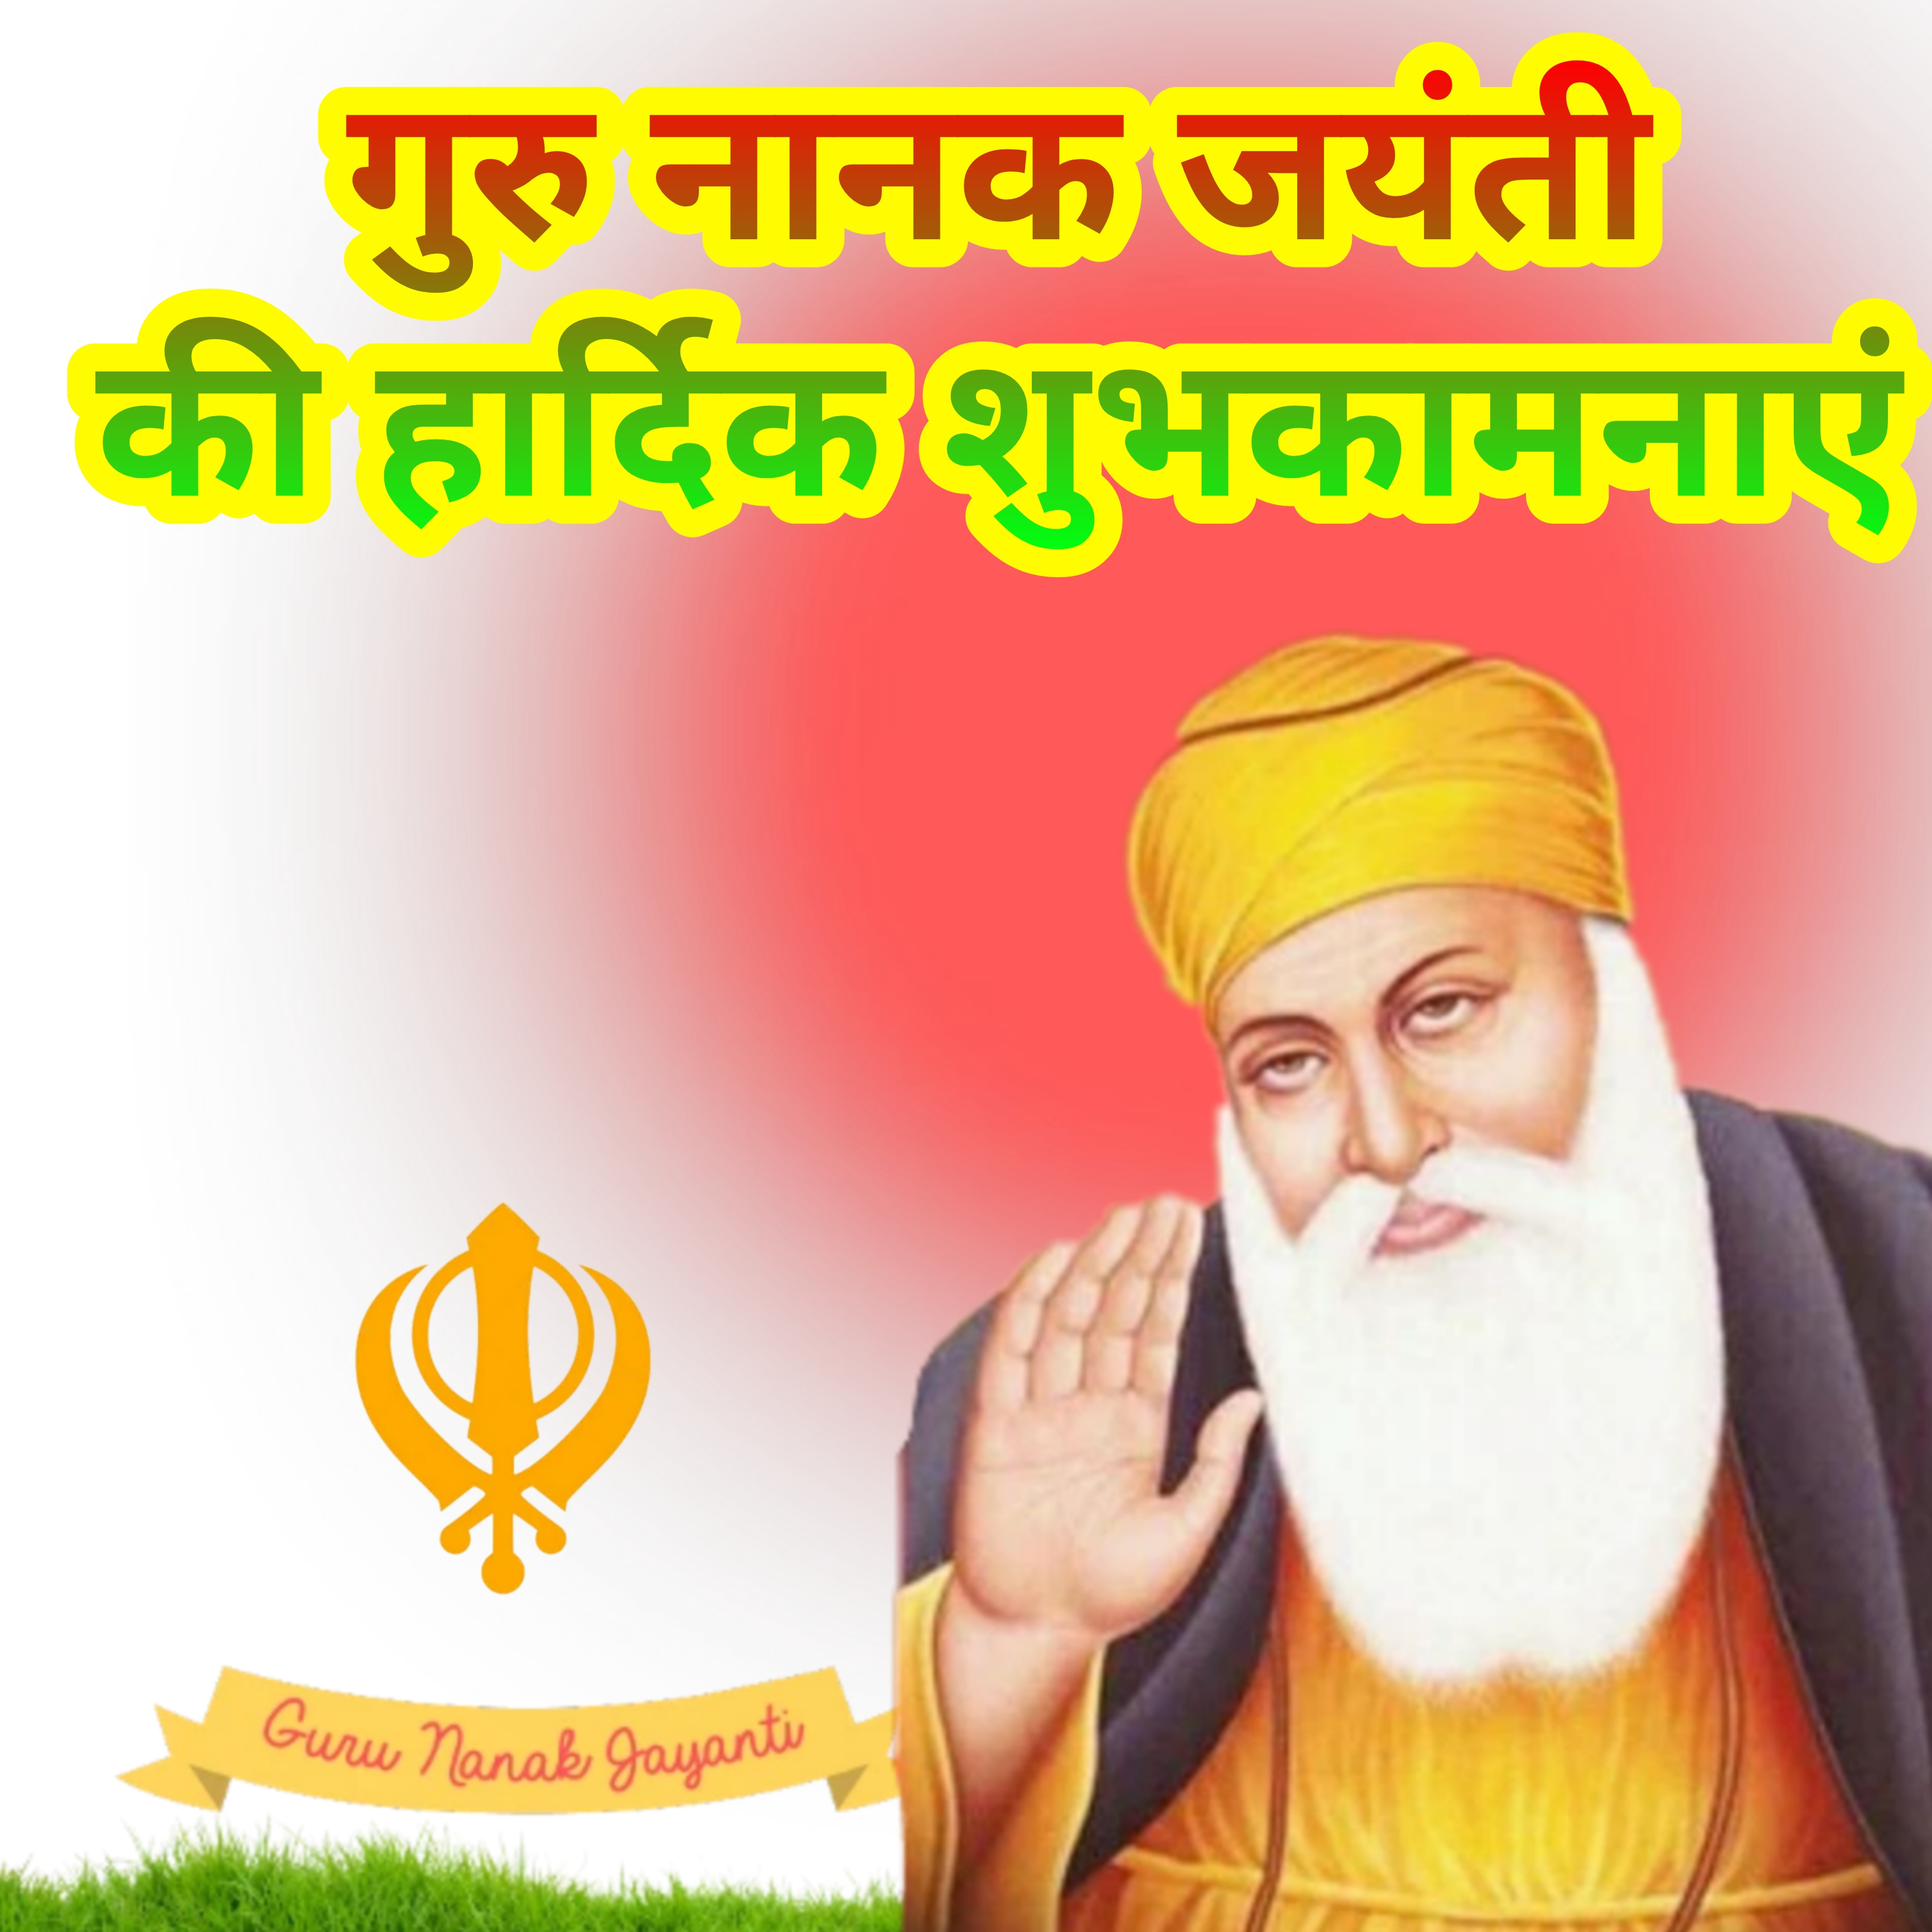 Happy Gurpurab Guru Nanak Jayanti ki Hardik Shubhkamnaye